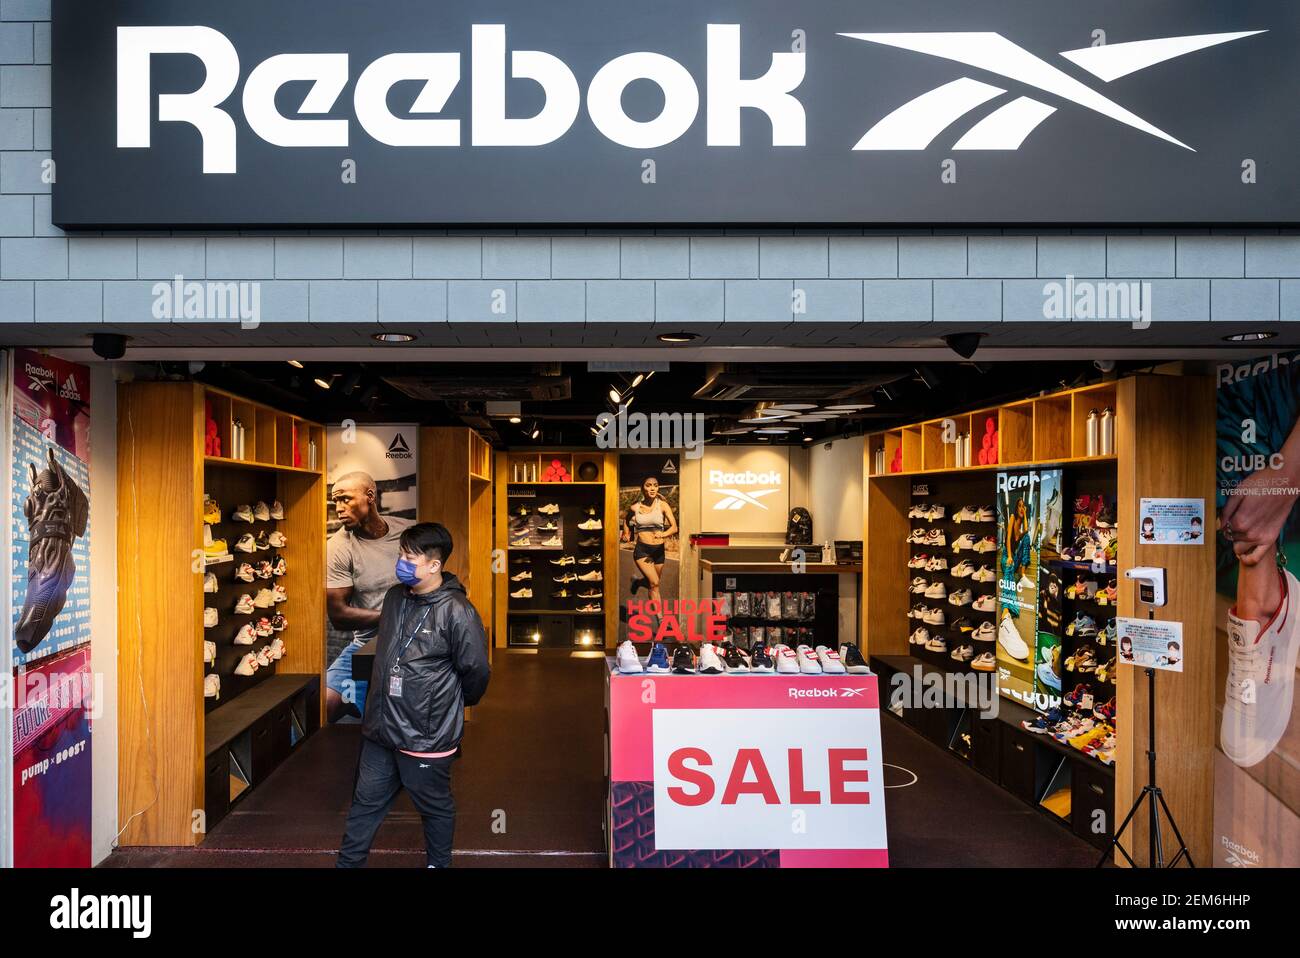 reebok shop uk Off 71% - www.ozdemirkonut.com.tr